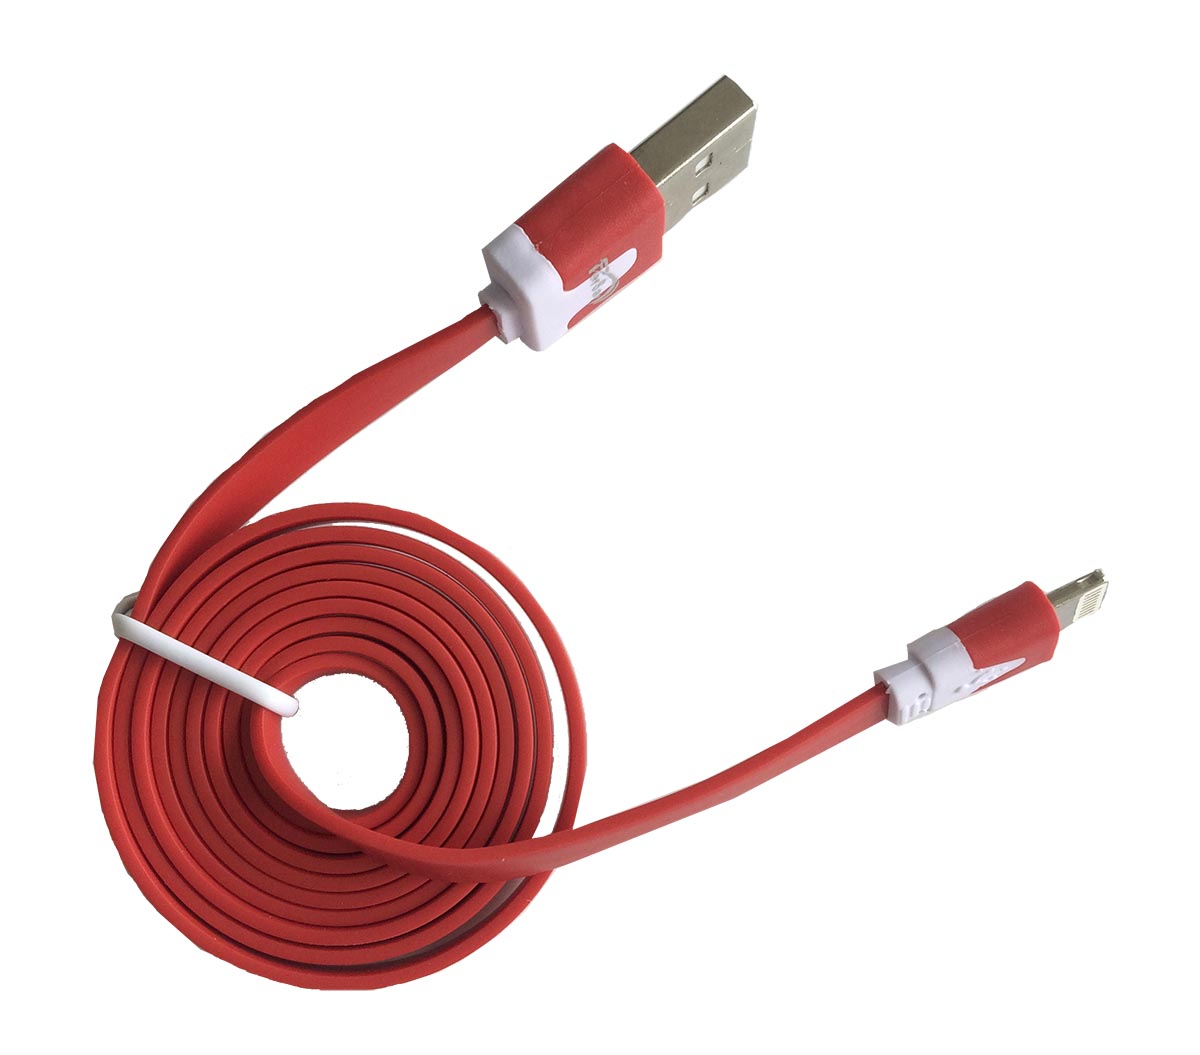 Cable carga y datos Iphone 6 rojo C2540R - FERSAYC2540R - FERSAY